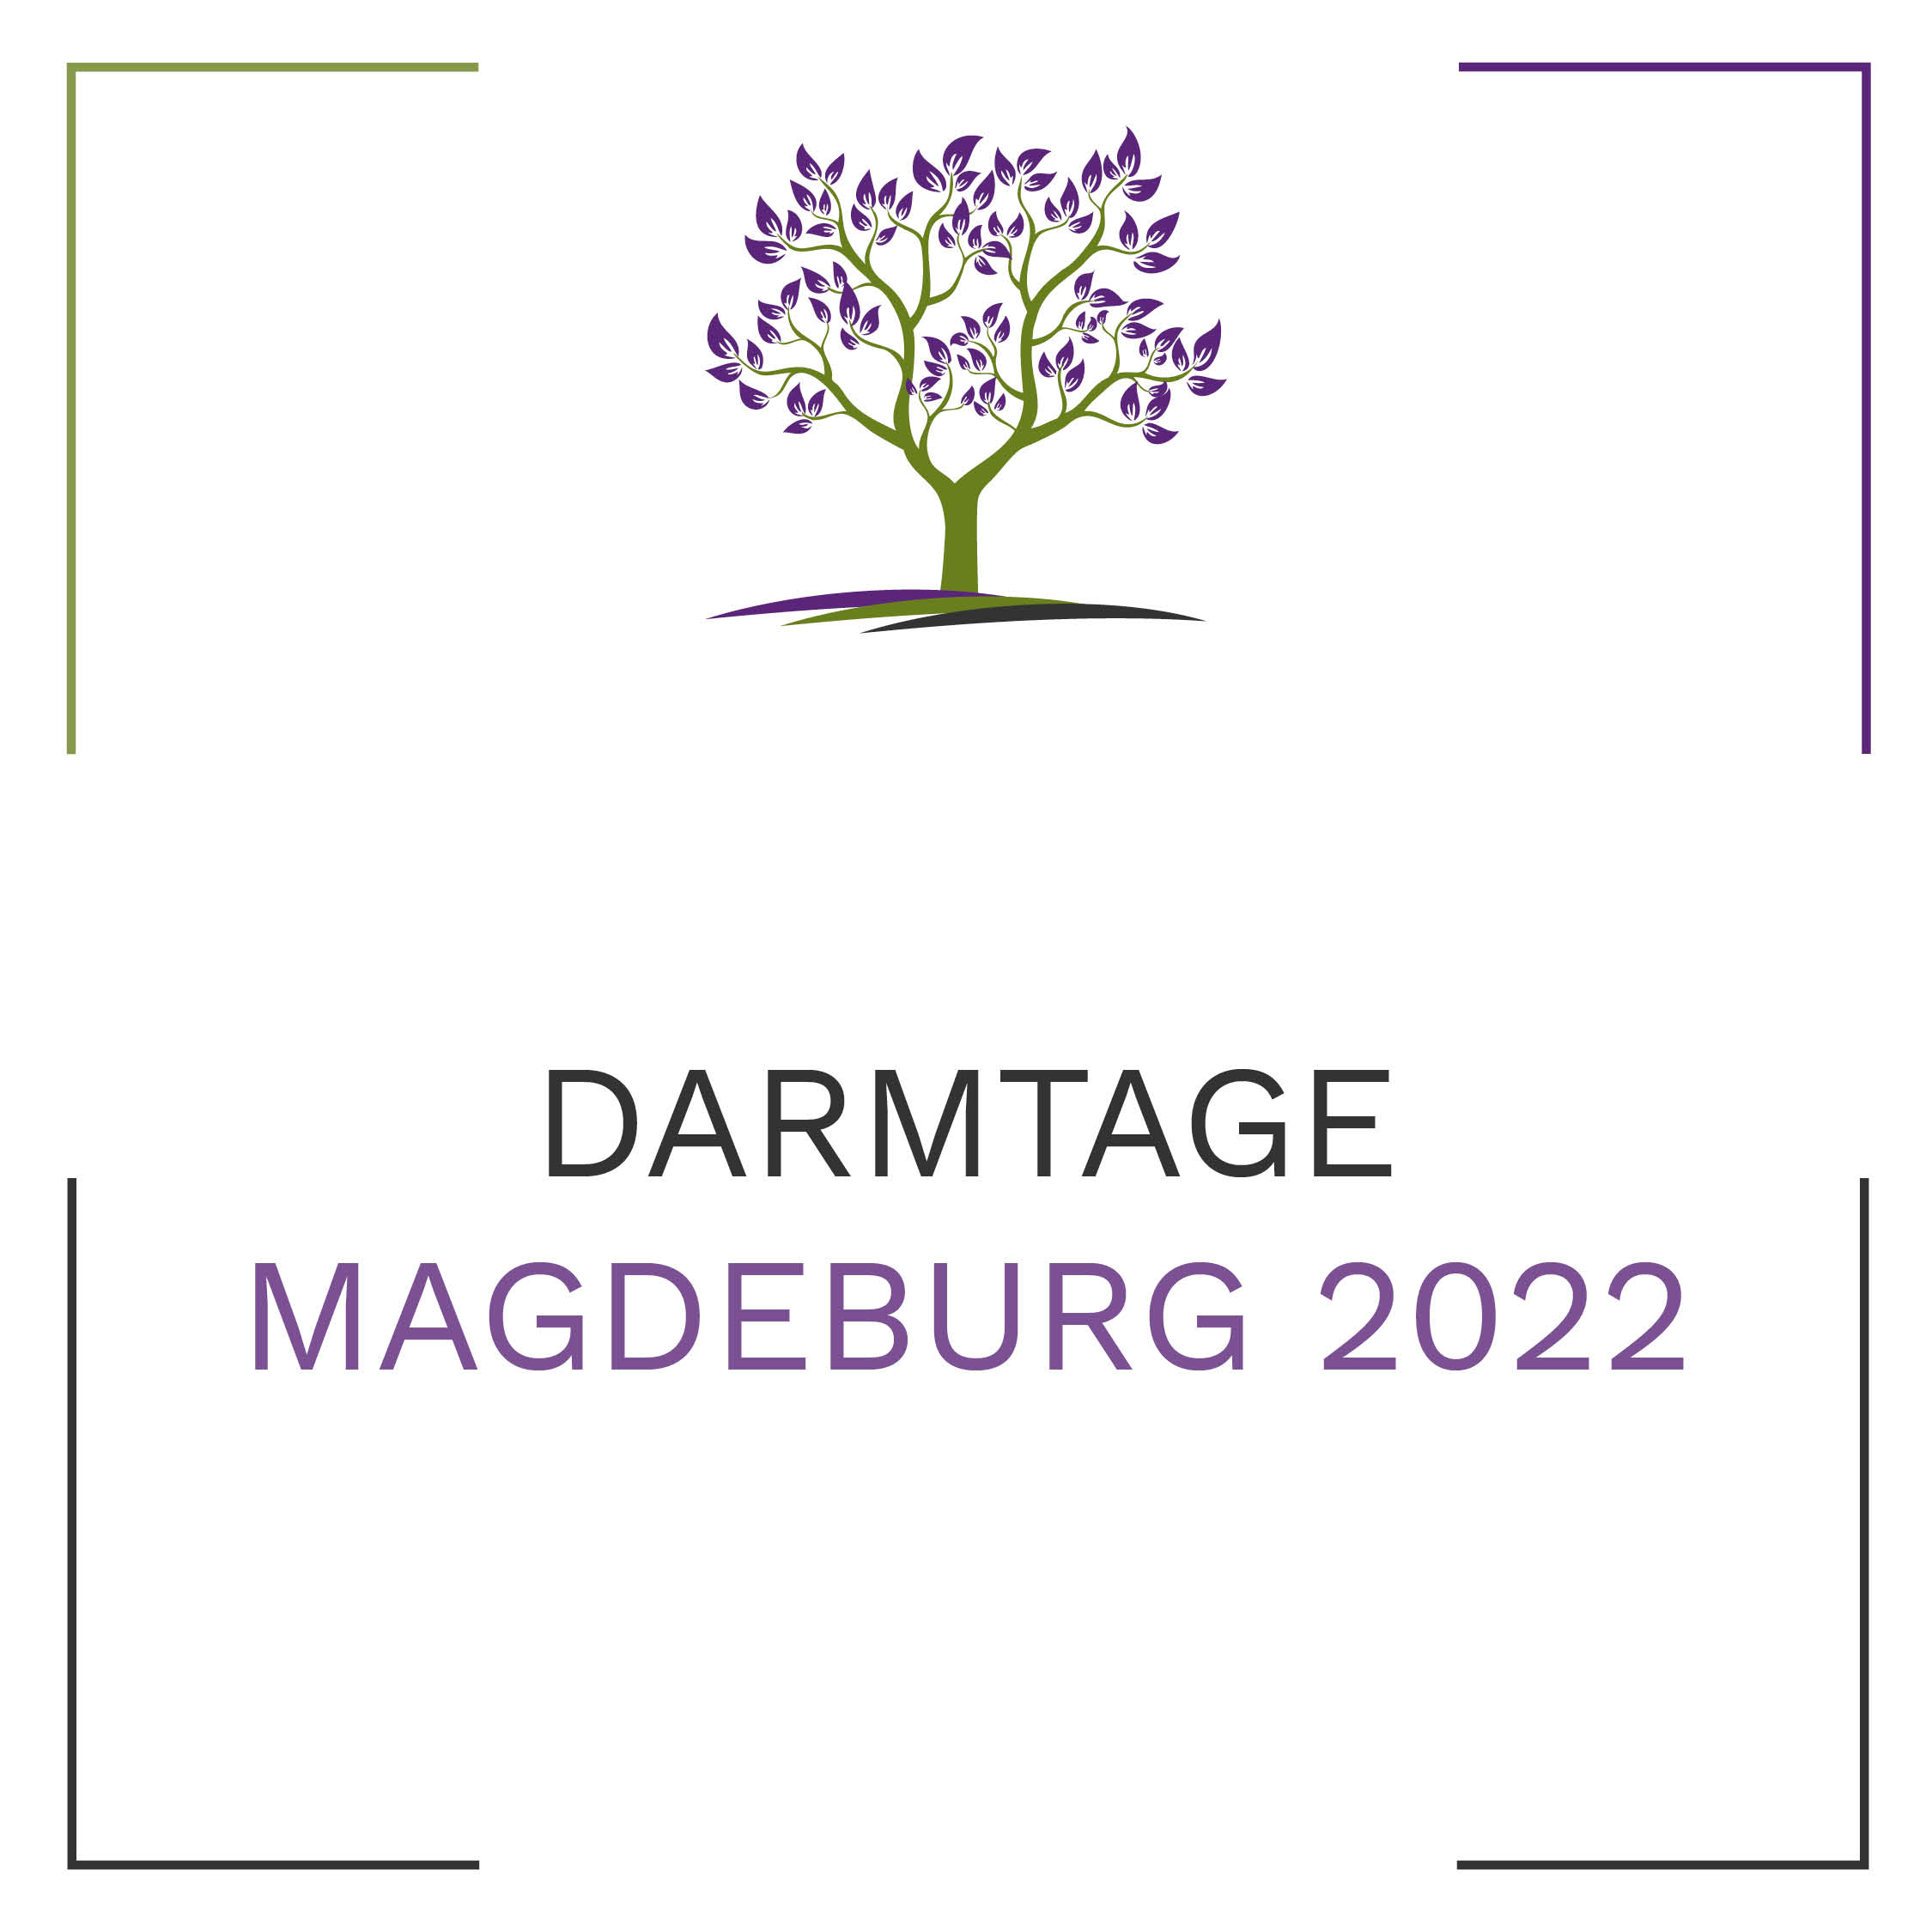 Darmtage Magdeburg 2022